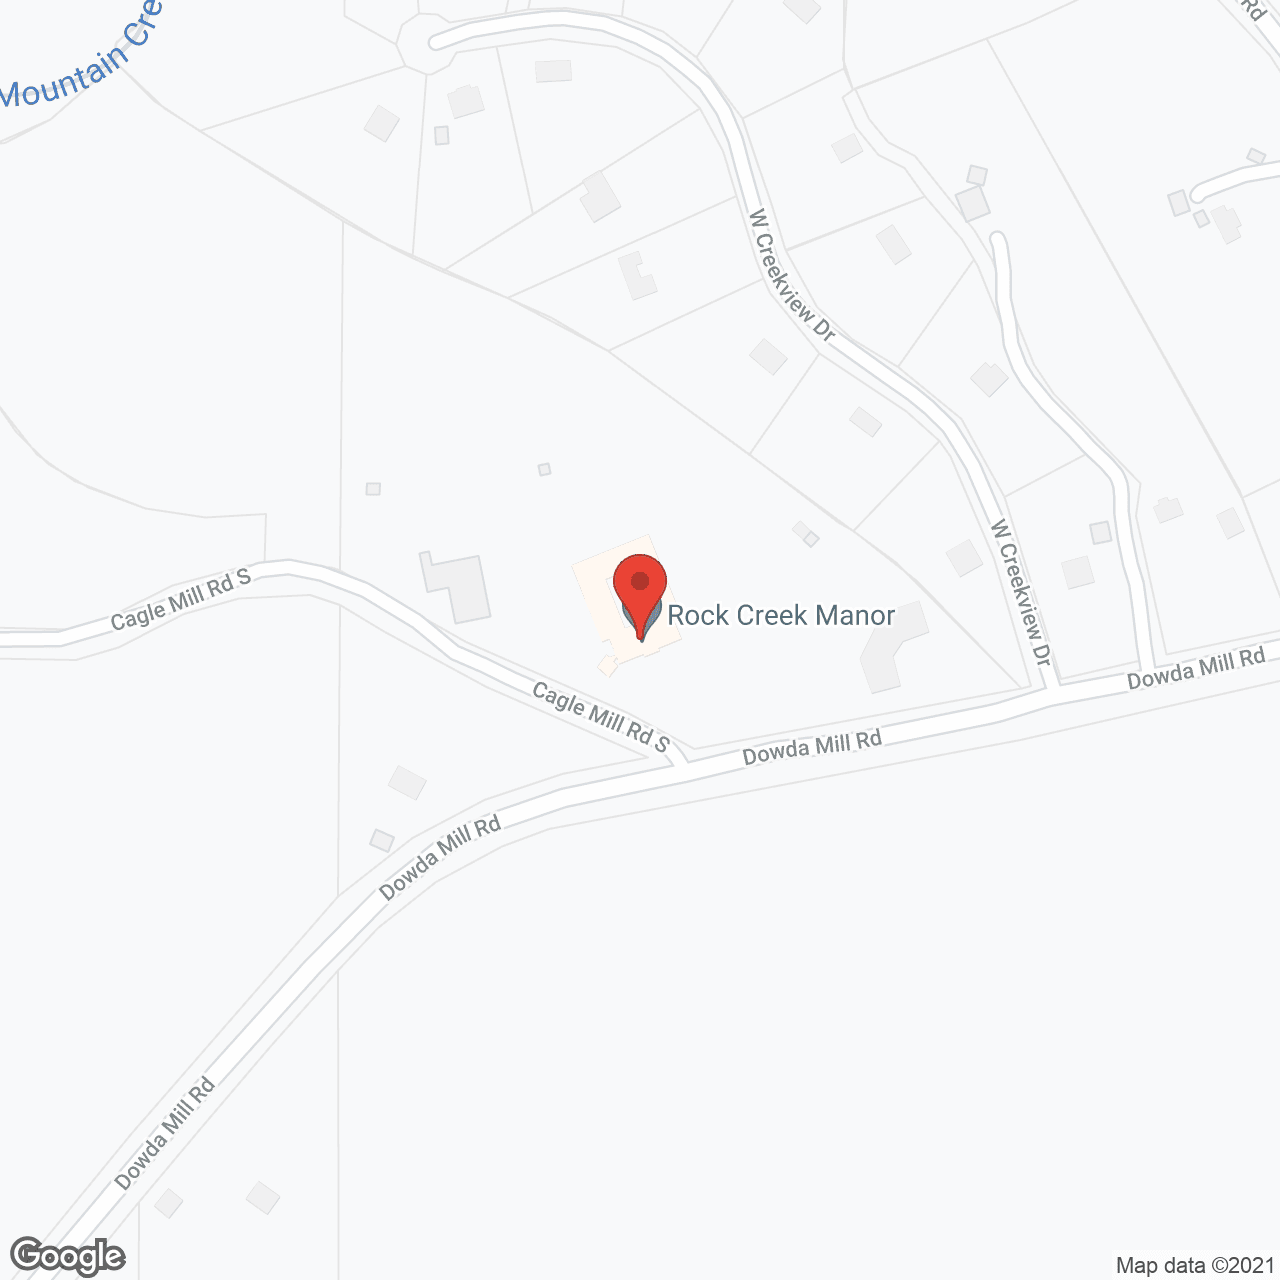 Rock Creek Manor in google map